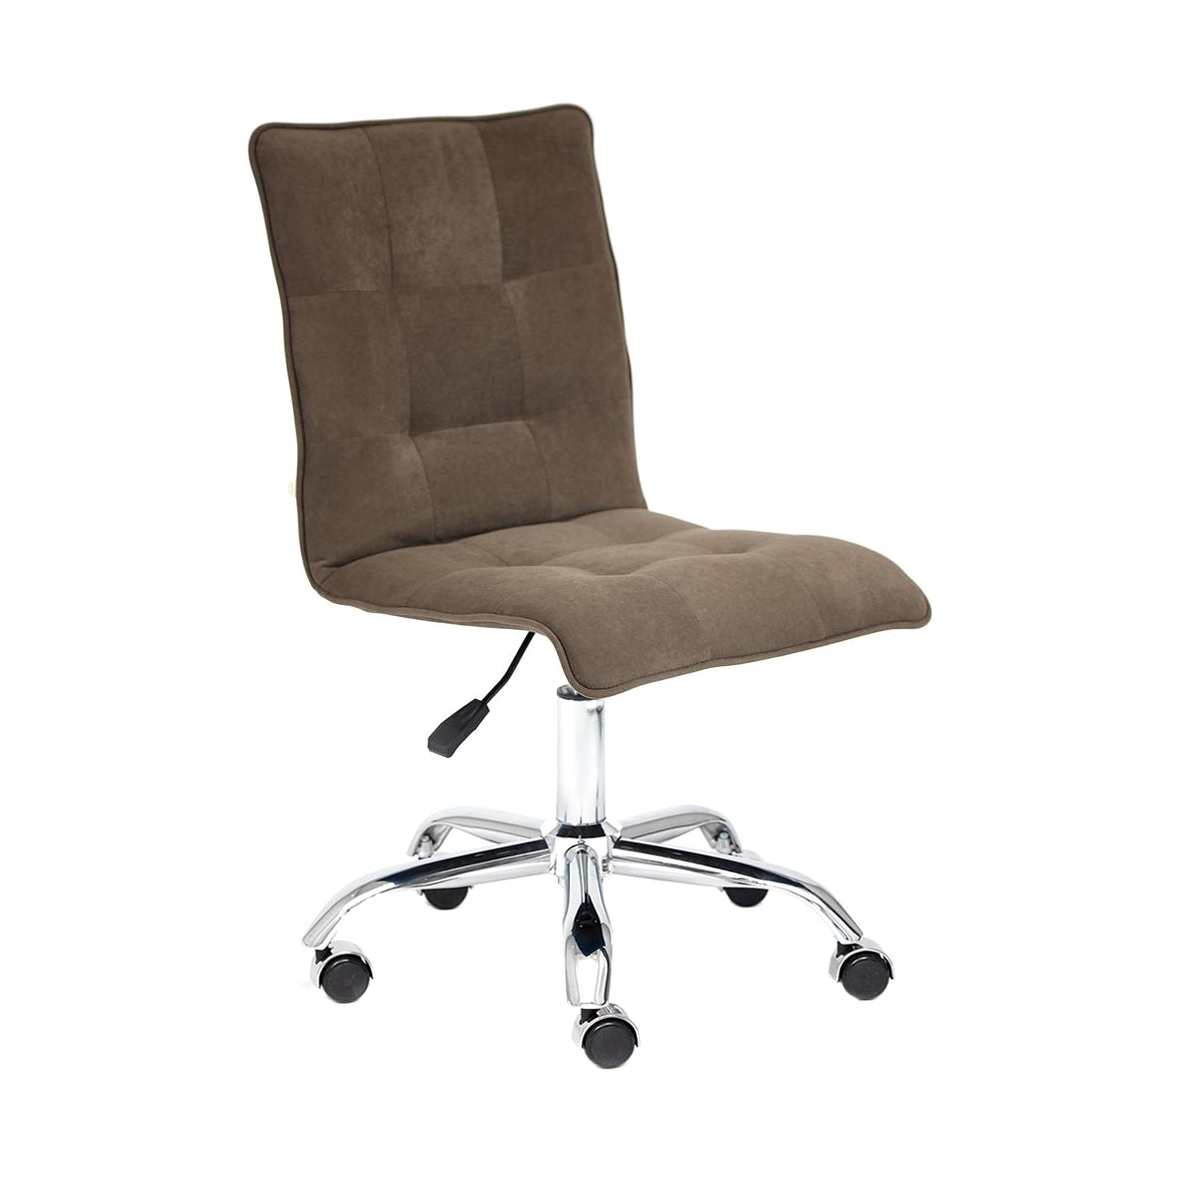 Кресло офисное TC до 100 кг 96х45х40 см коричневый кресло tc modern boeing 42x58x84 5x47 см коричневый черный